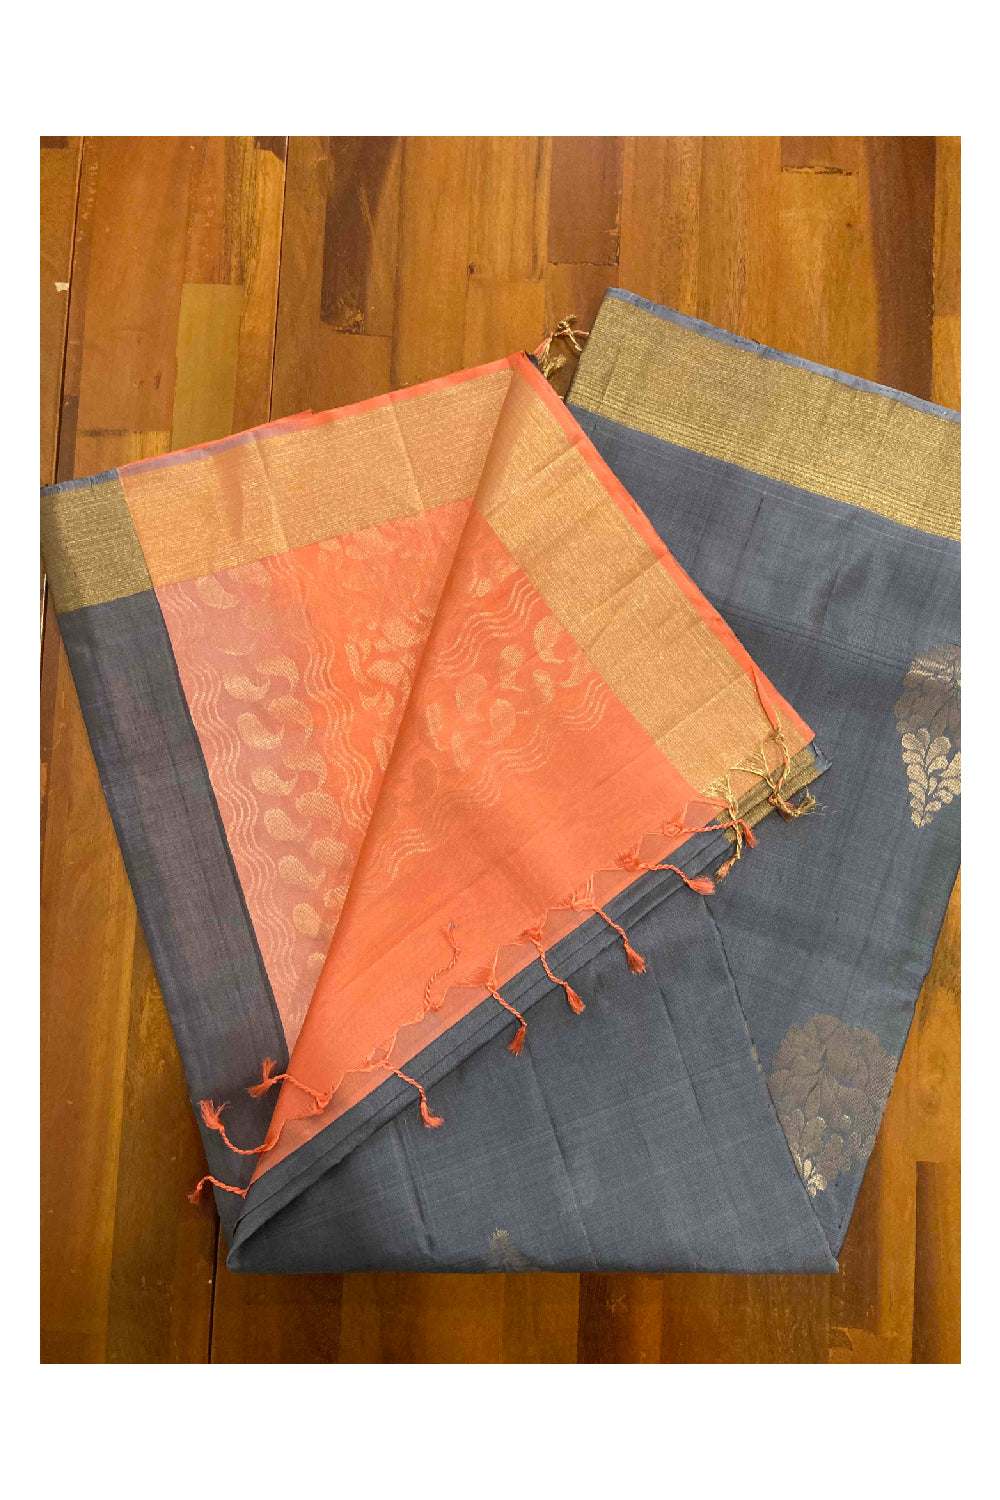 Southloom Handloom Pure Silk Kanchipuram Saree in Grey and Sandal Paisley Motifs